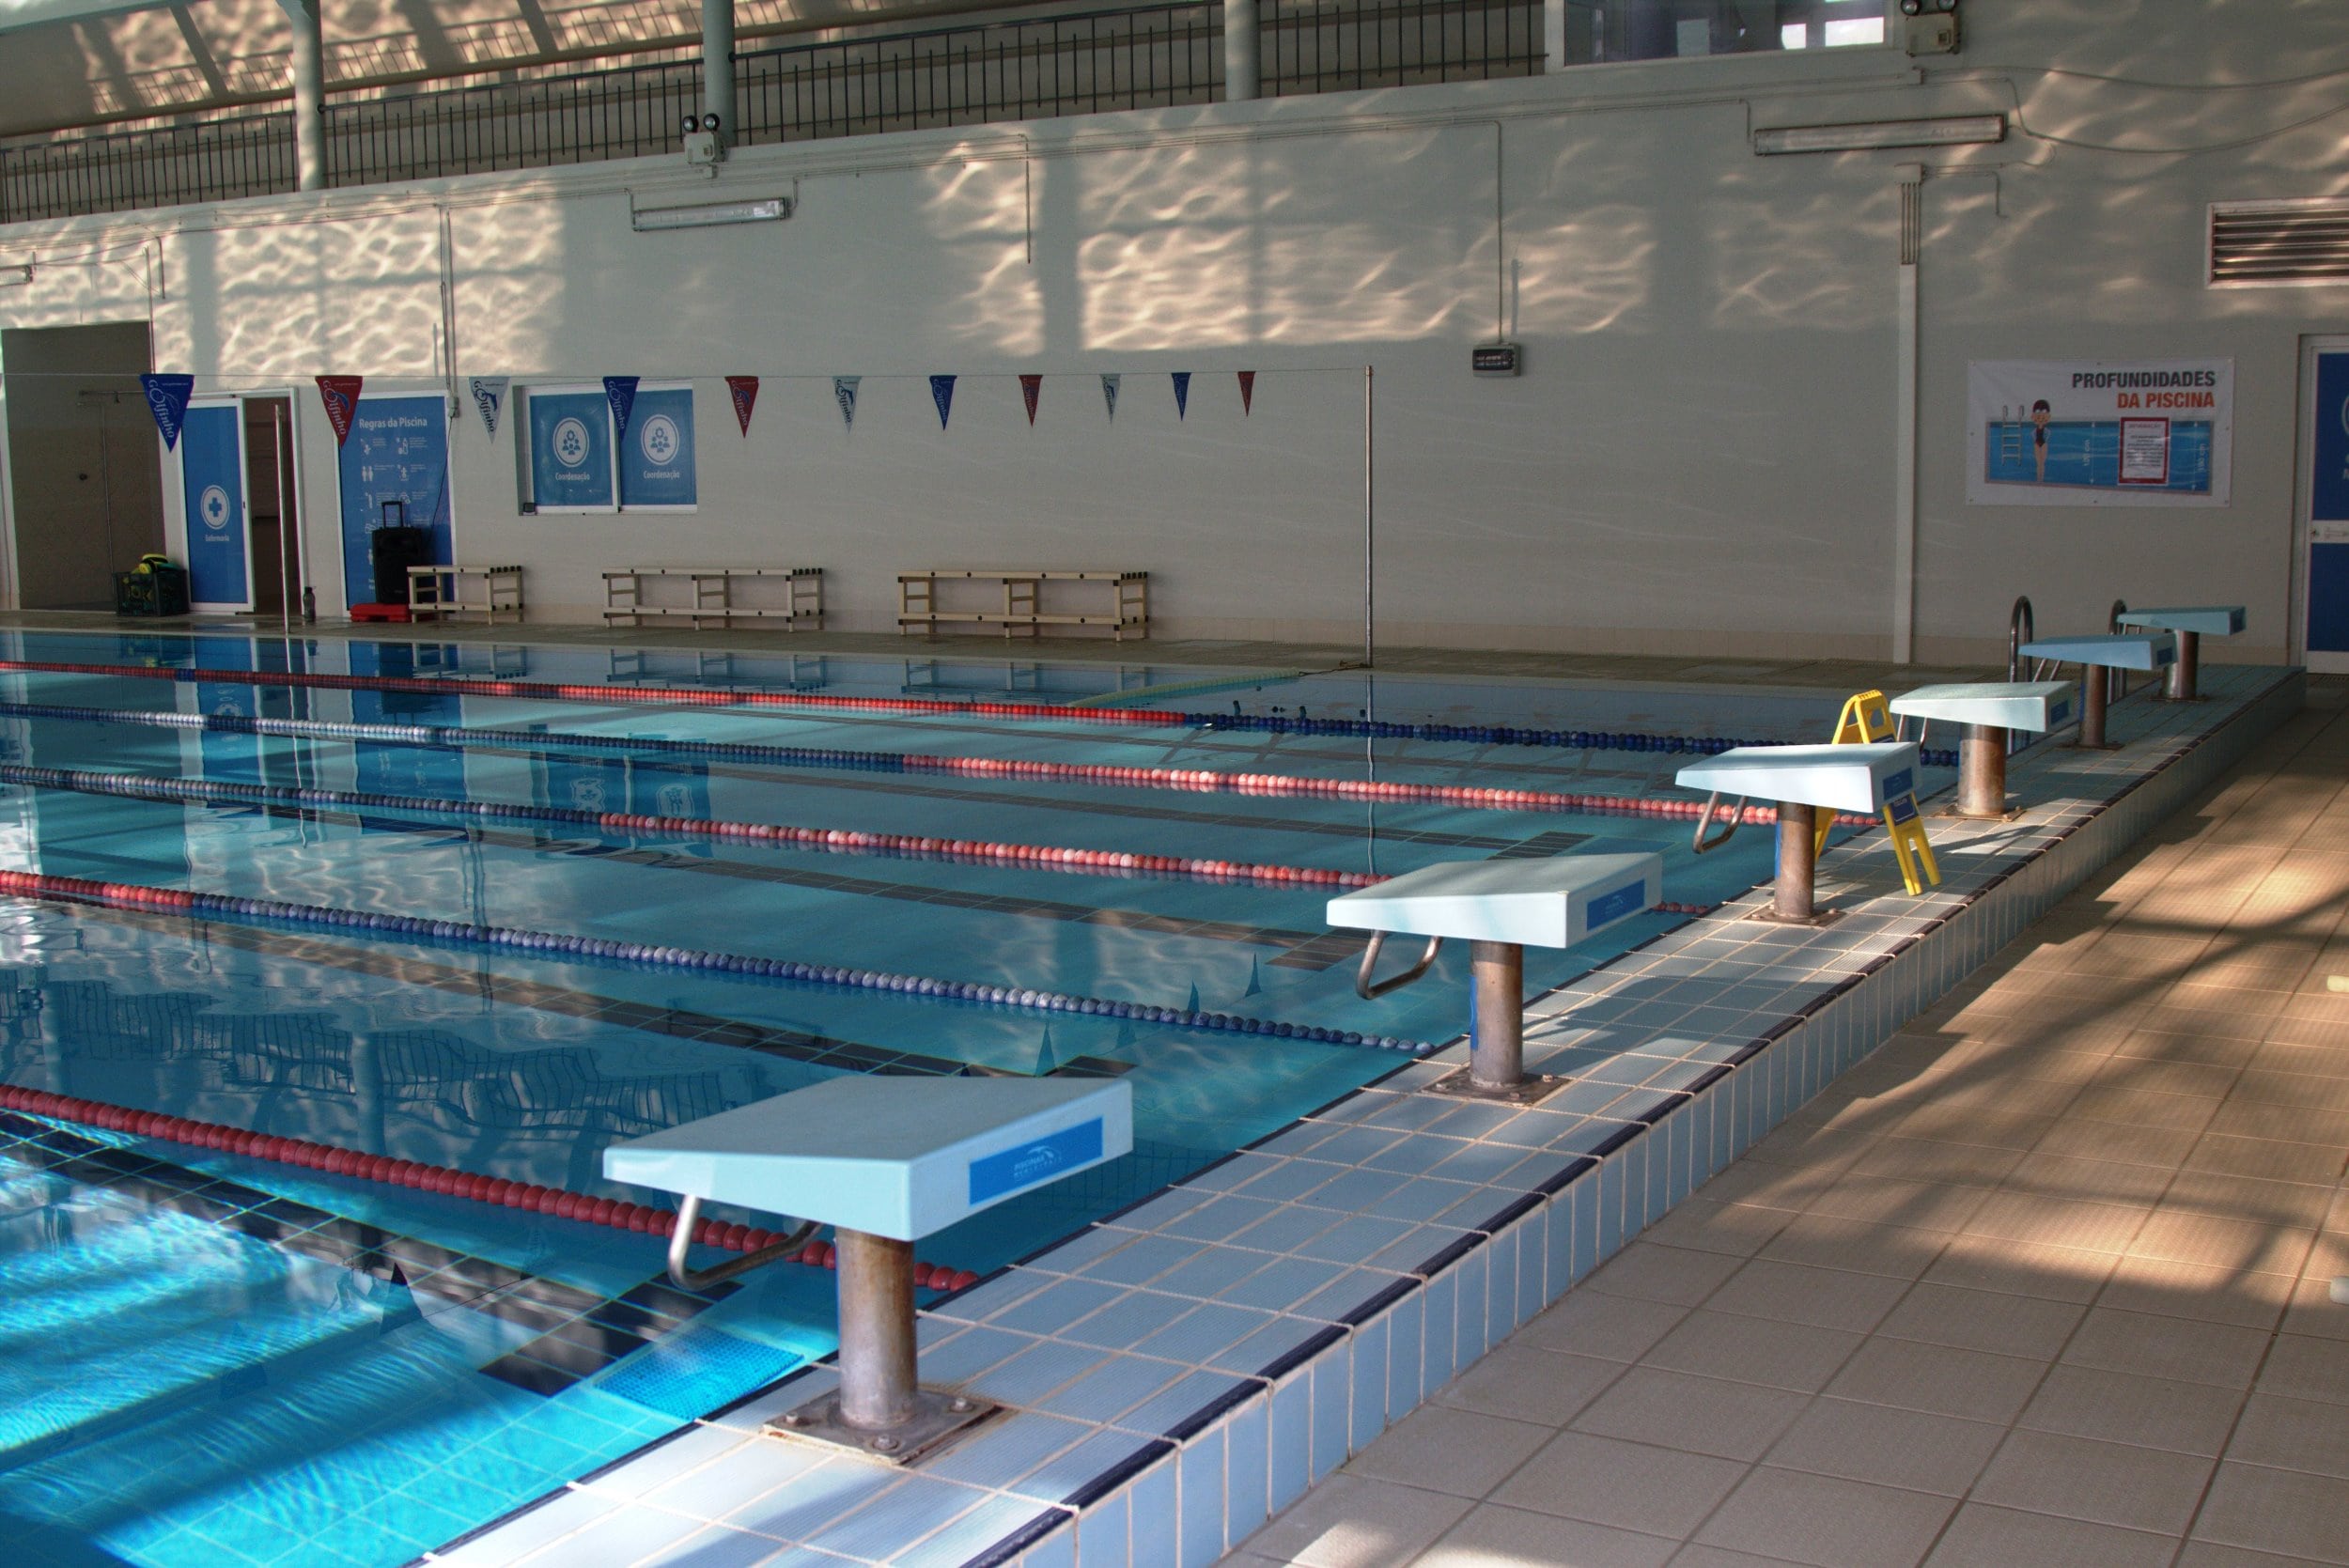 equipamentops_desportivos___piscinas_jardim_9131_min